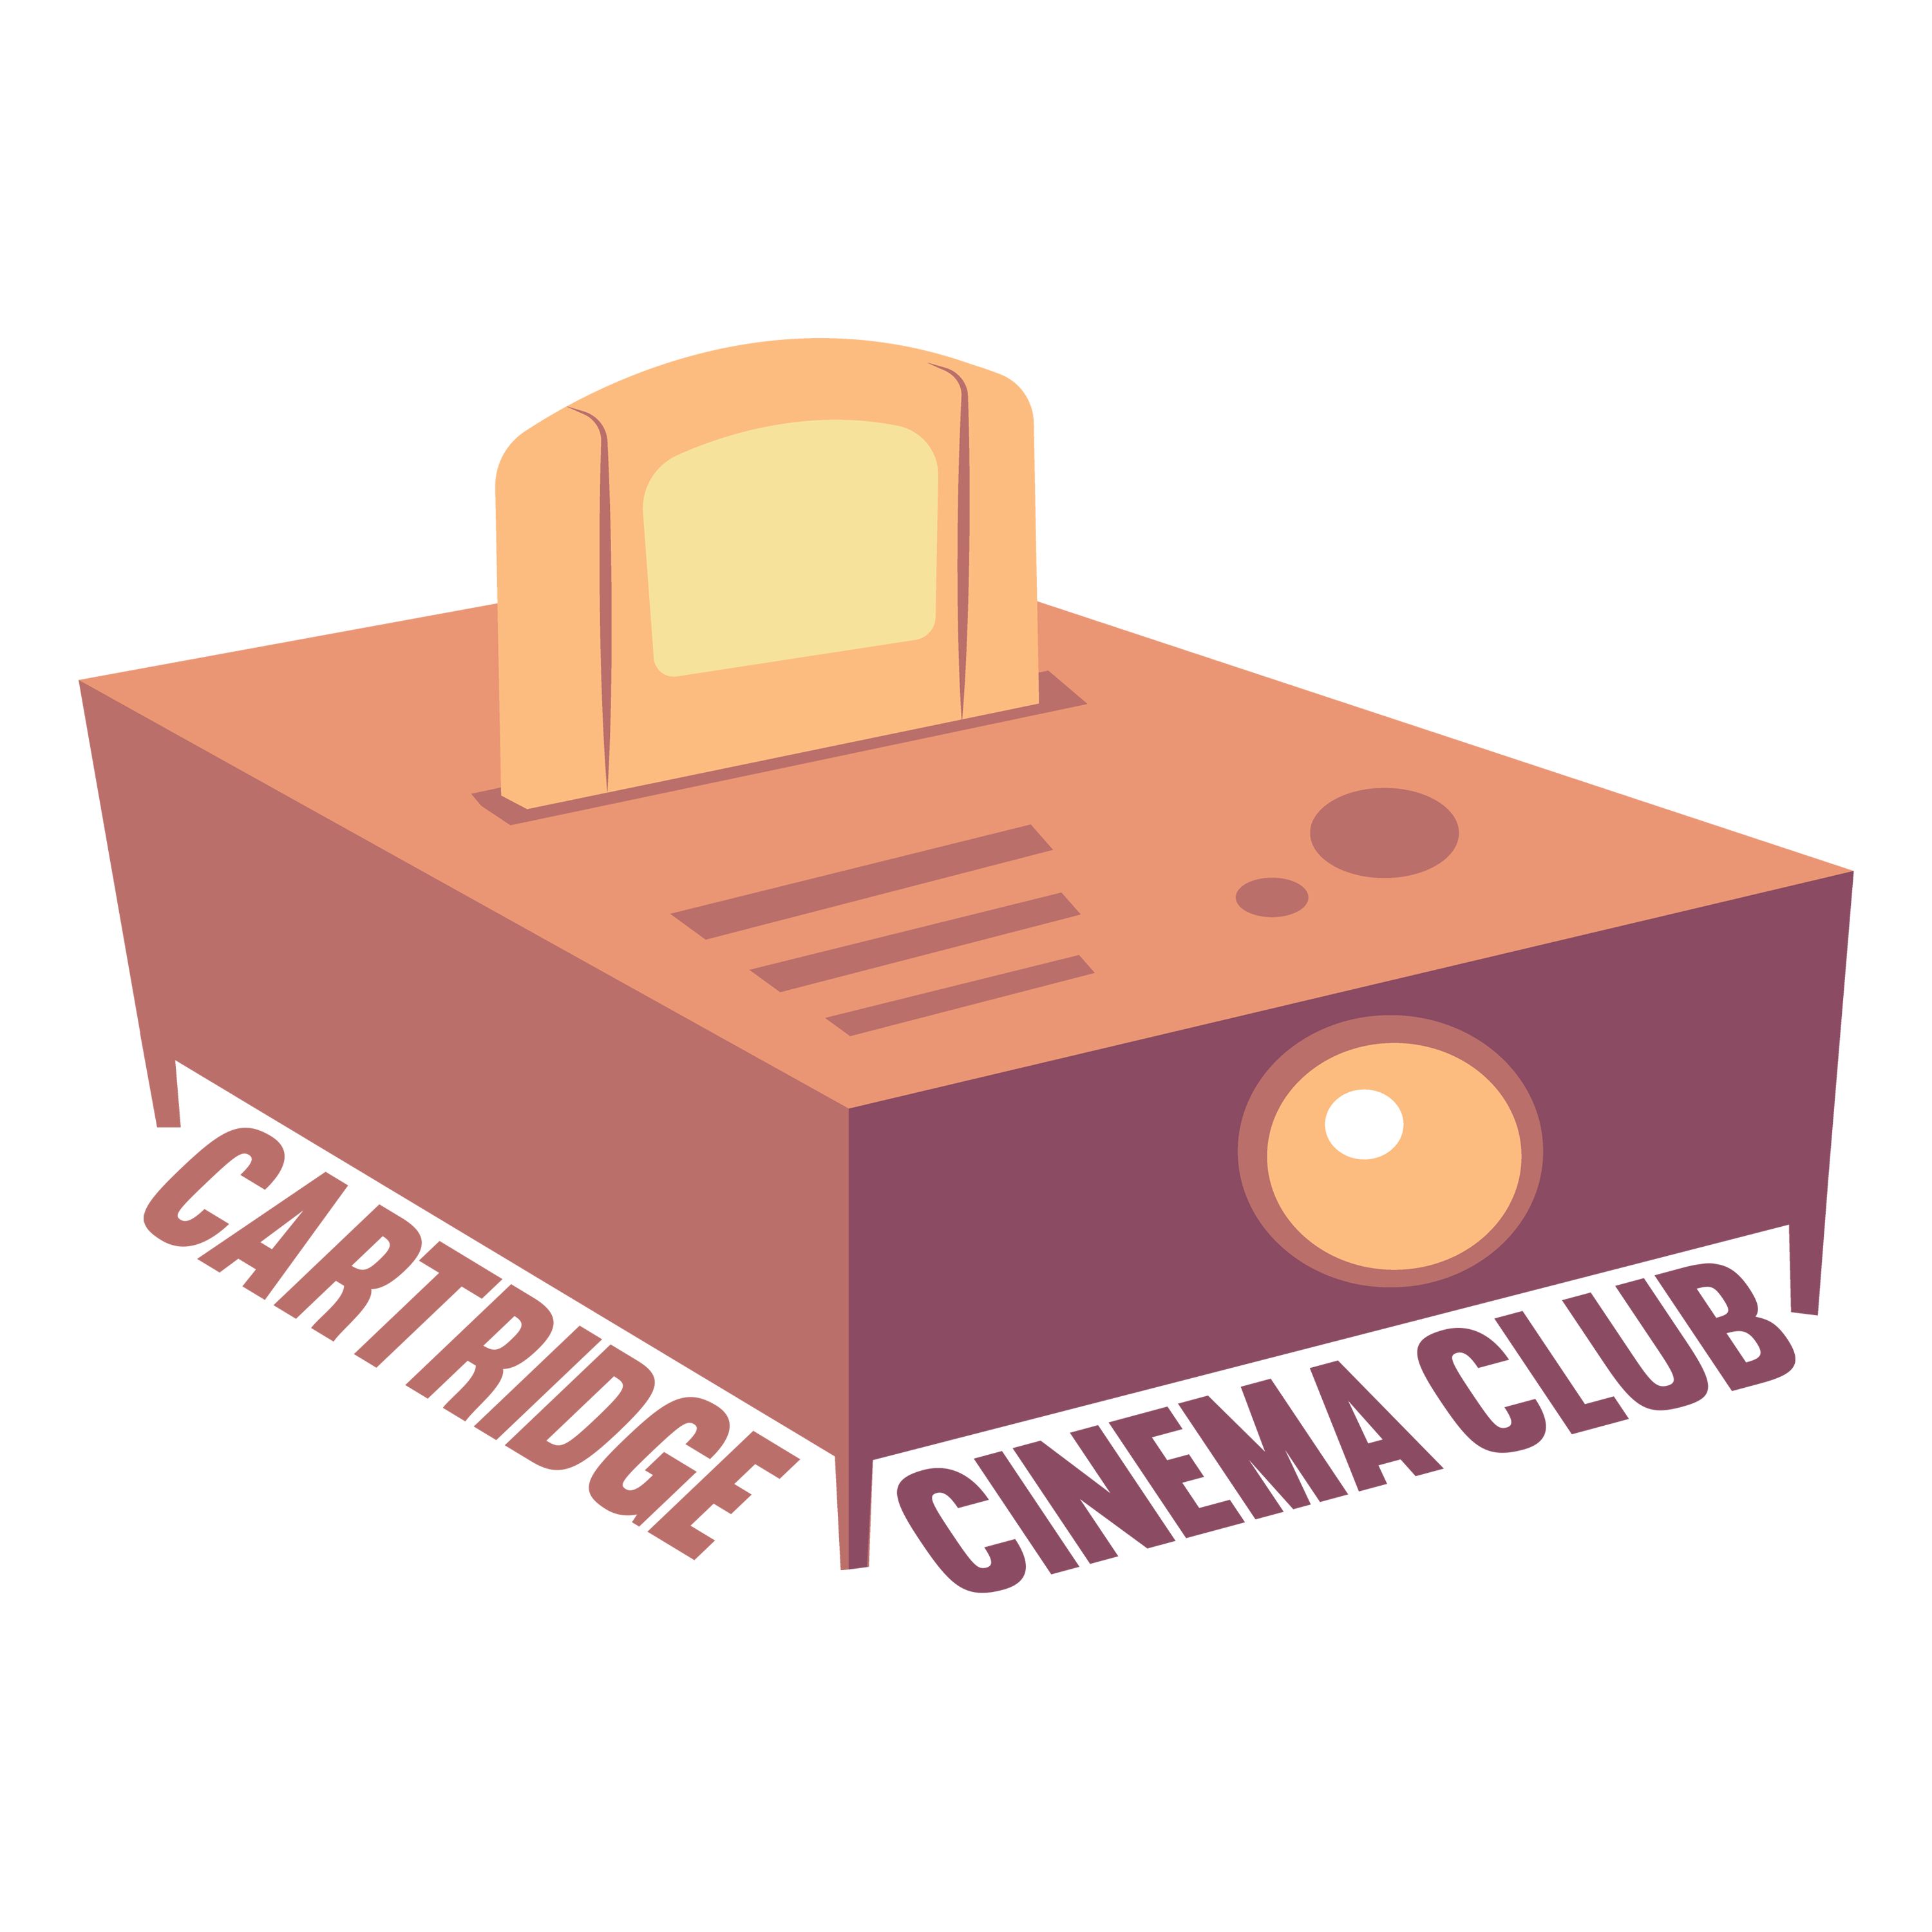 Cartridge Cinema Club